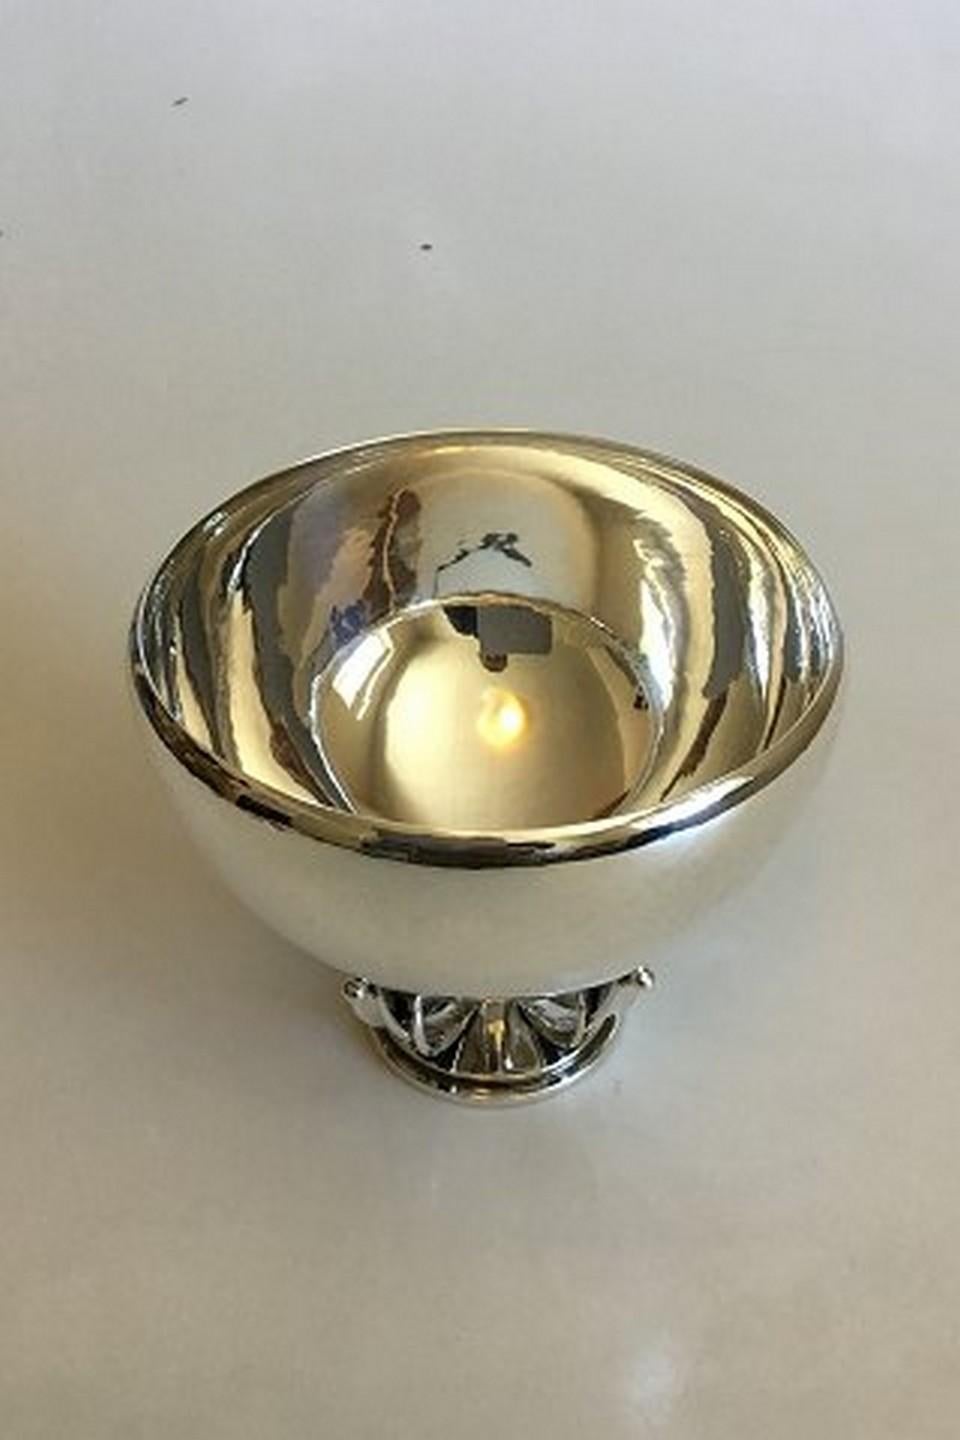 Georg Jensen sterling silver bowl no 665. 
Designed by Gustav Pedersen. Measures 11.5 cm / 4 17/32 in. x 13.8 cm / 5 7/16 in. diameter. 
Weighs 357 g / 12.60 oz.
Item no.: 337892.